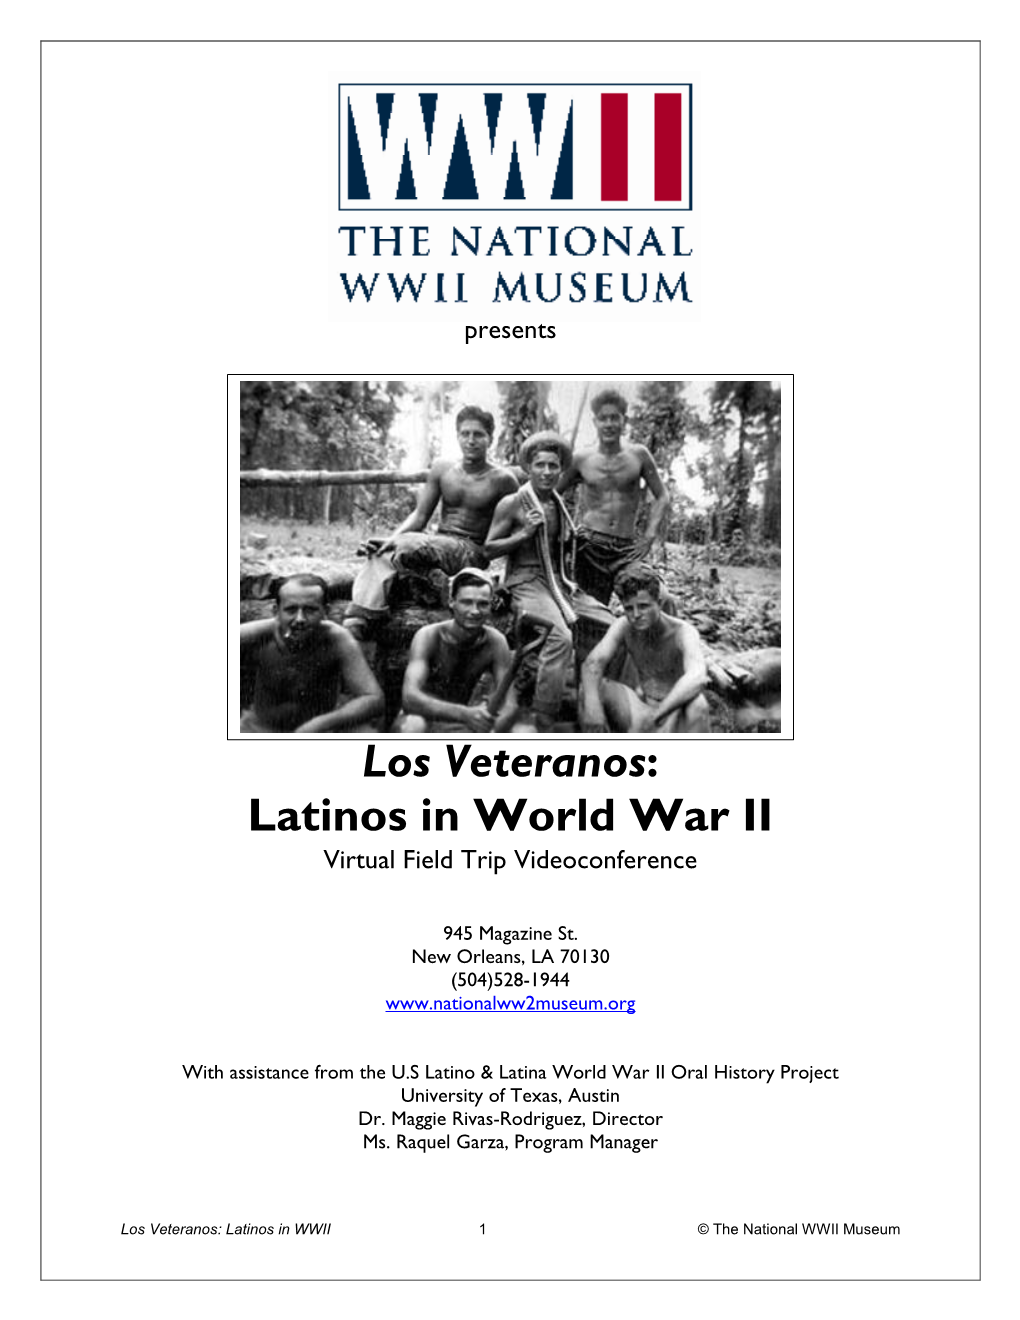 Latinos in World War II Virtual Field Trip Videoconference